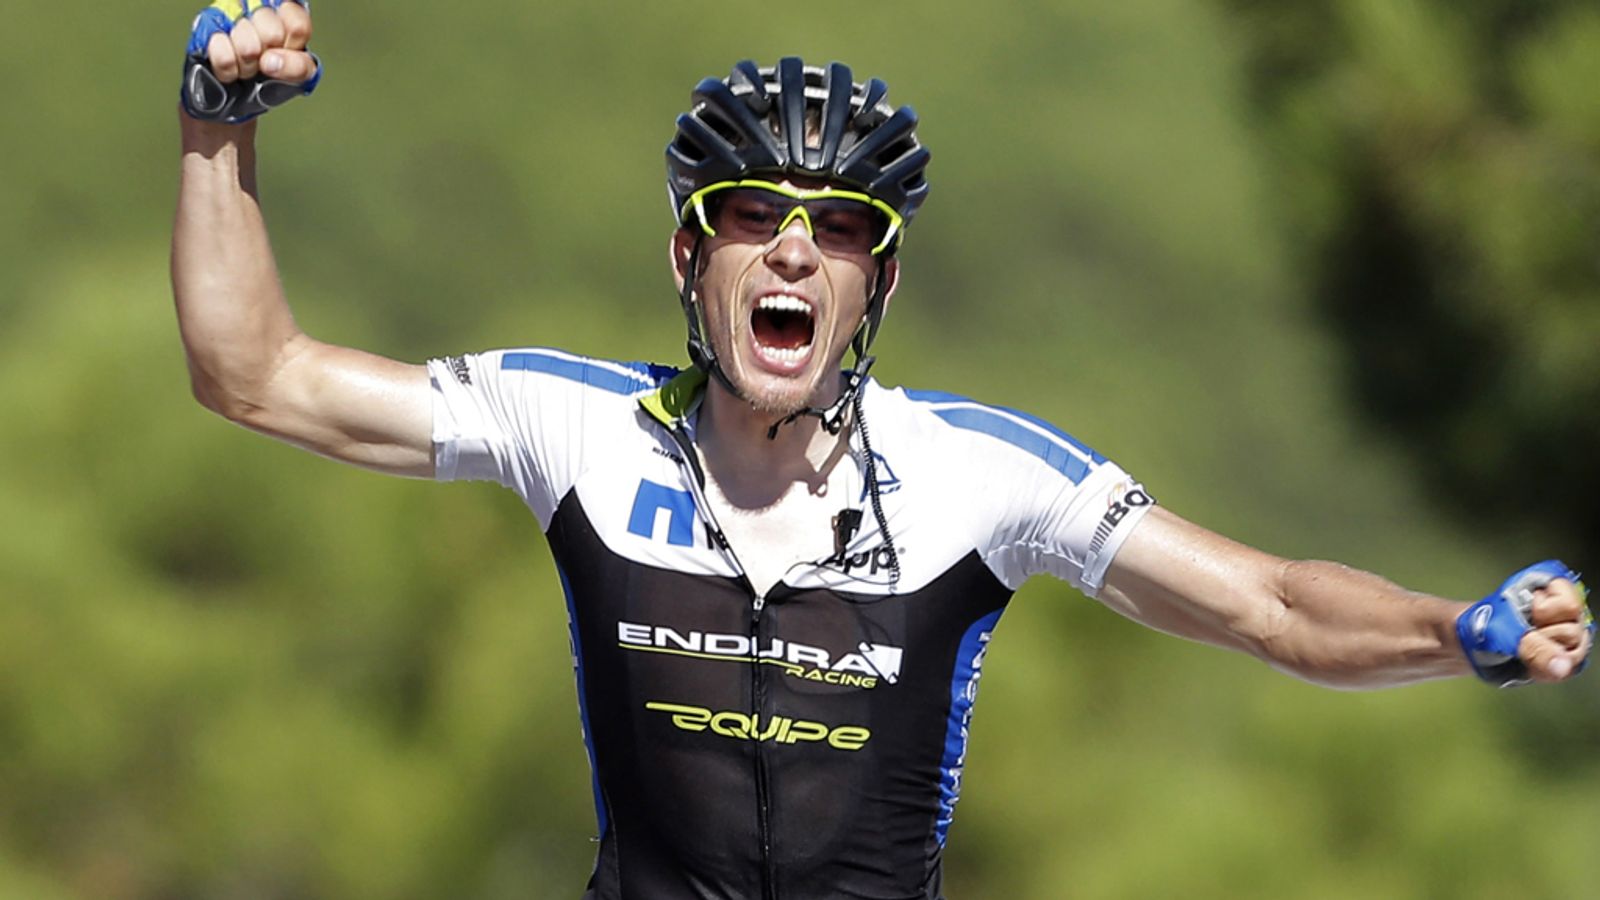 NetApp-Endura target wildcard place in Tour de France in wake of Vuelta ...